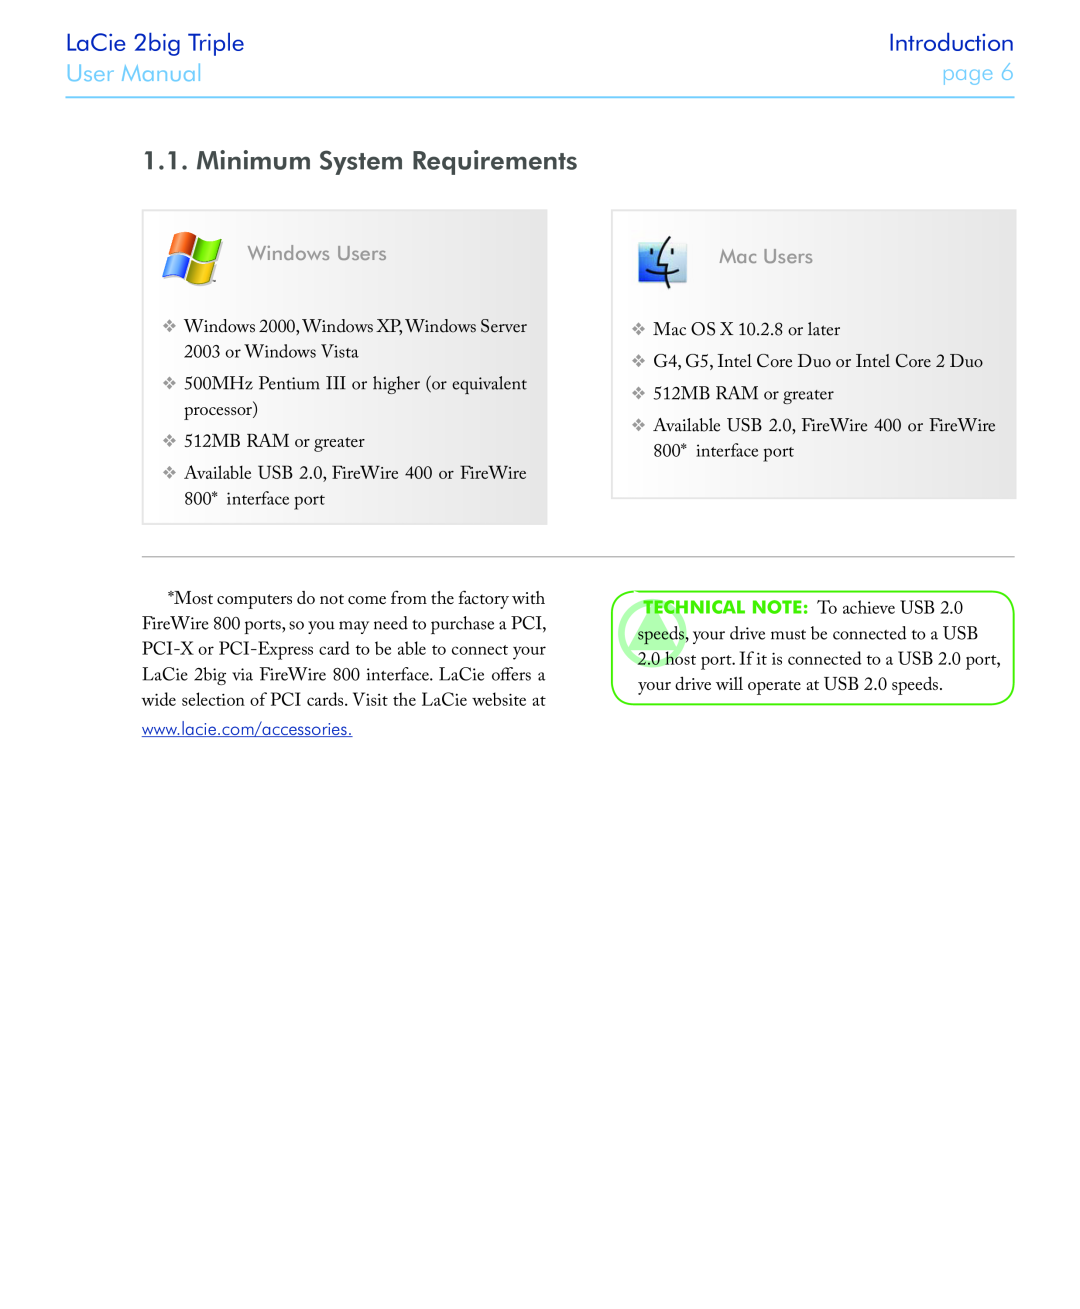 LaCie 2big triple Minimum System Requirements, Windows Users, Mac Users, LaCie 2big Triple, Introduction, User Manual 